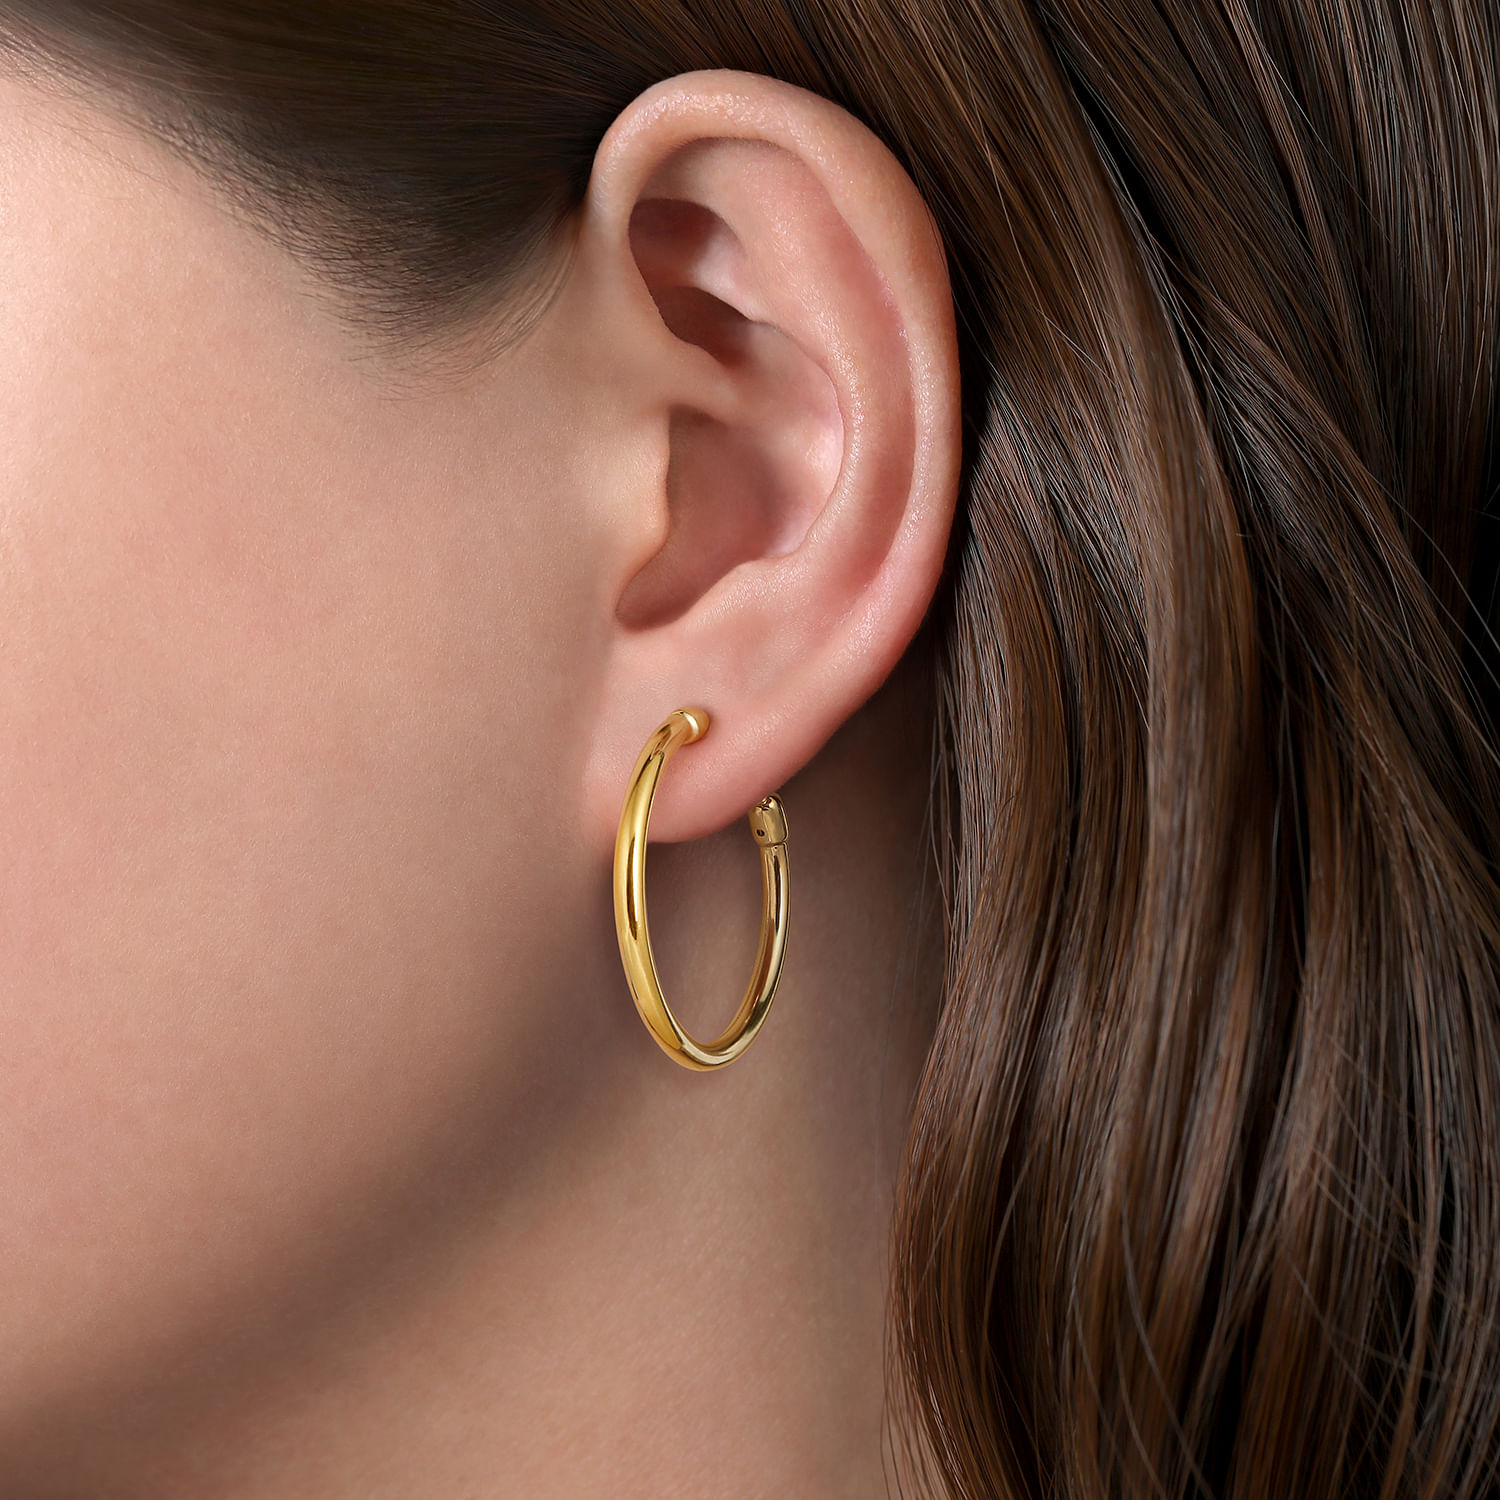 14K Yellow Gold 30mm Classic Hoops Earrings